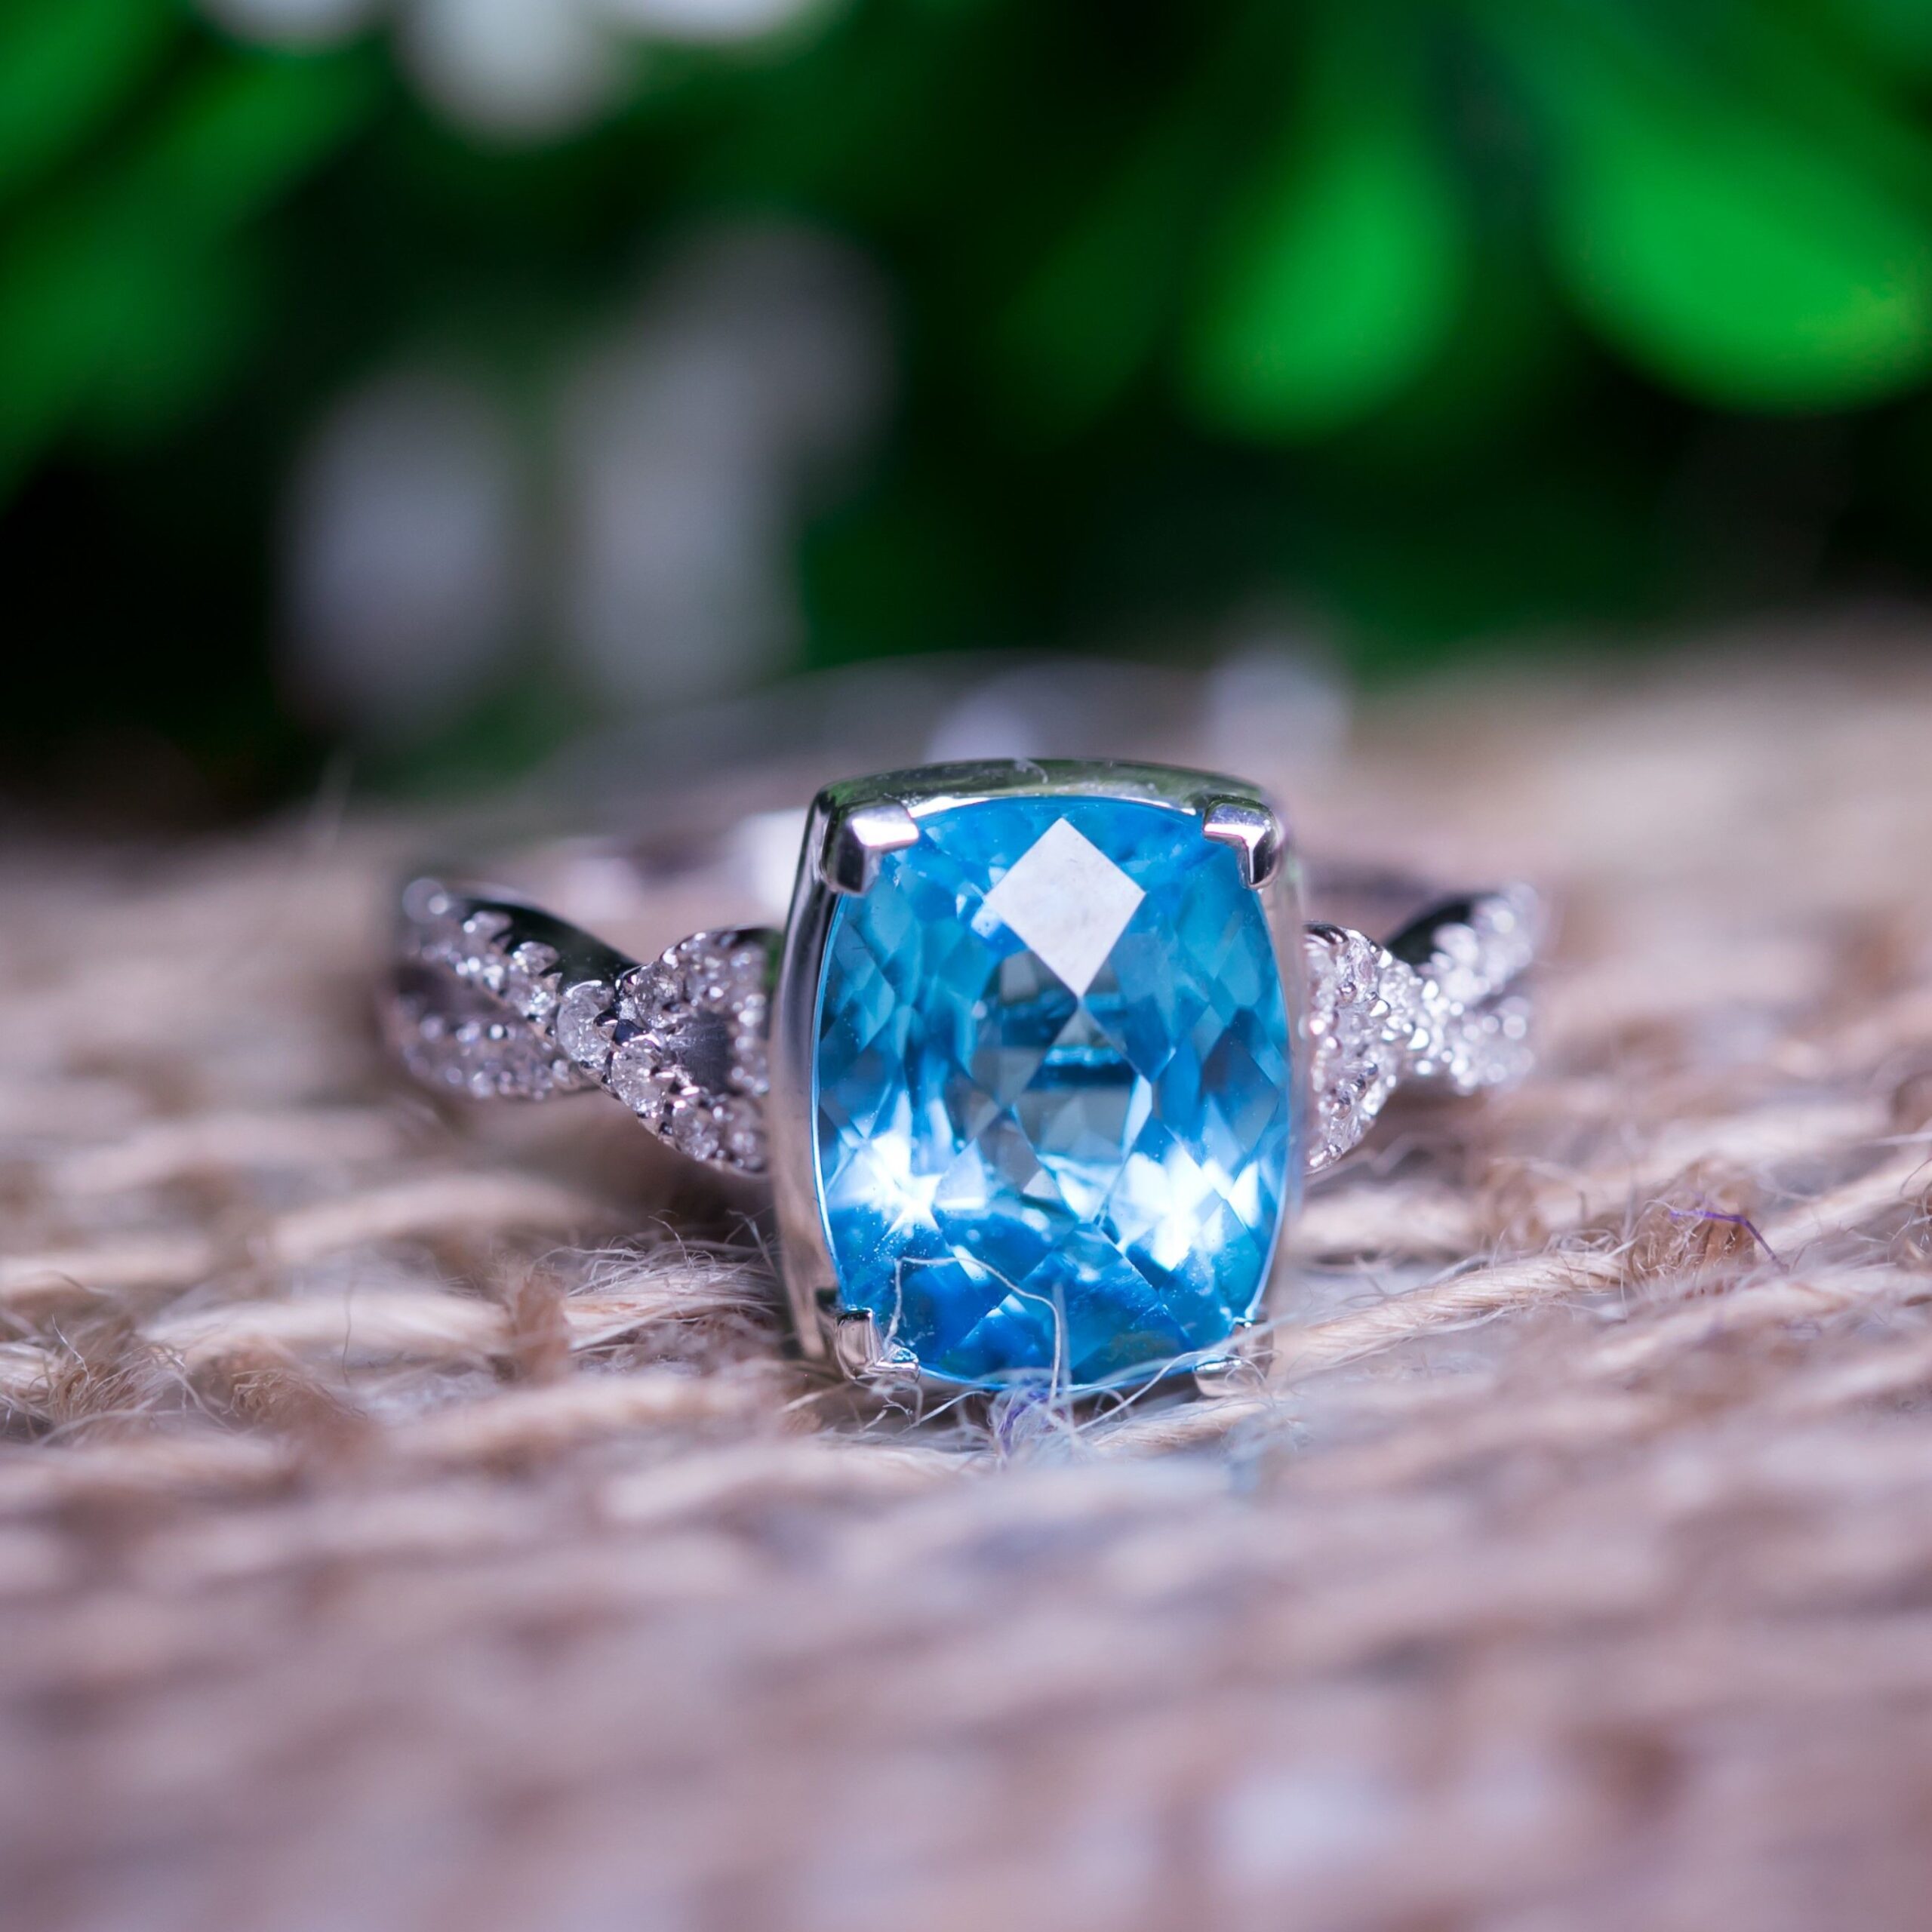 The Beautiful Blue Stone for Jewelry | December Stone: Blue Topaz - Diamond wish